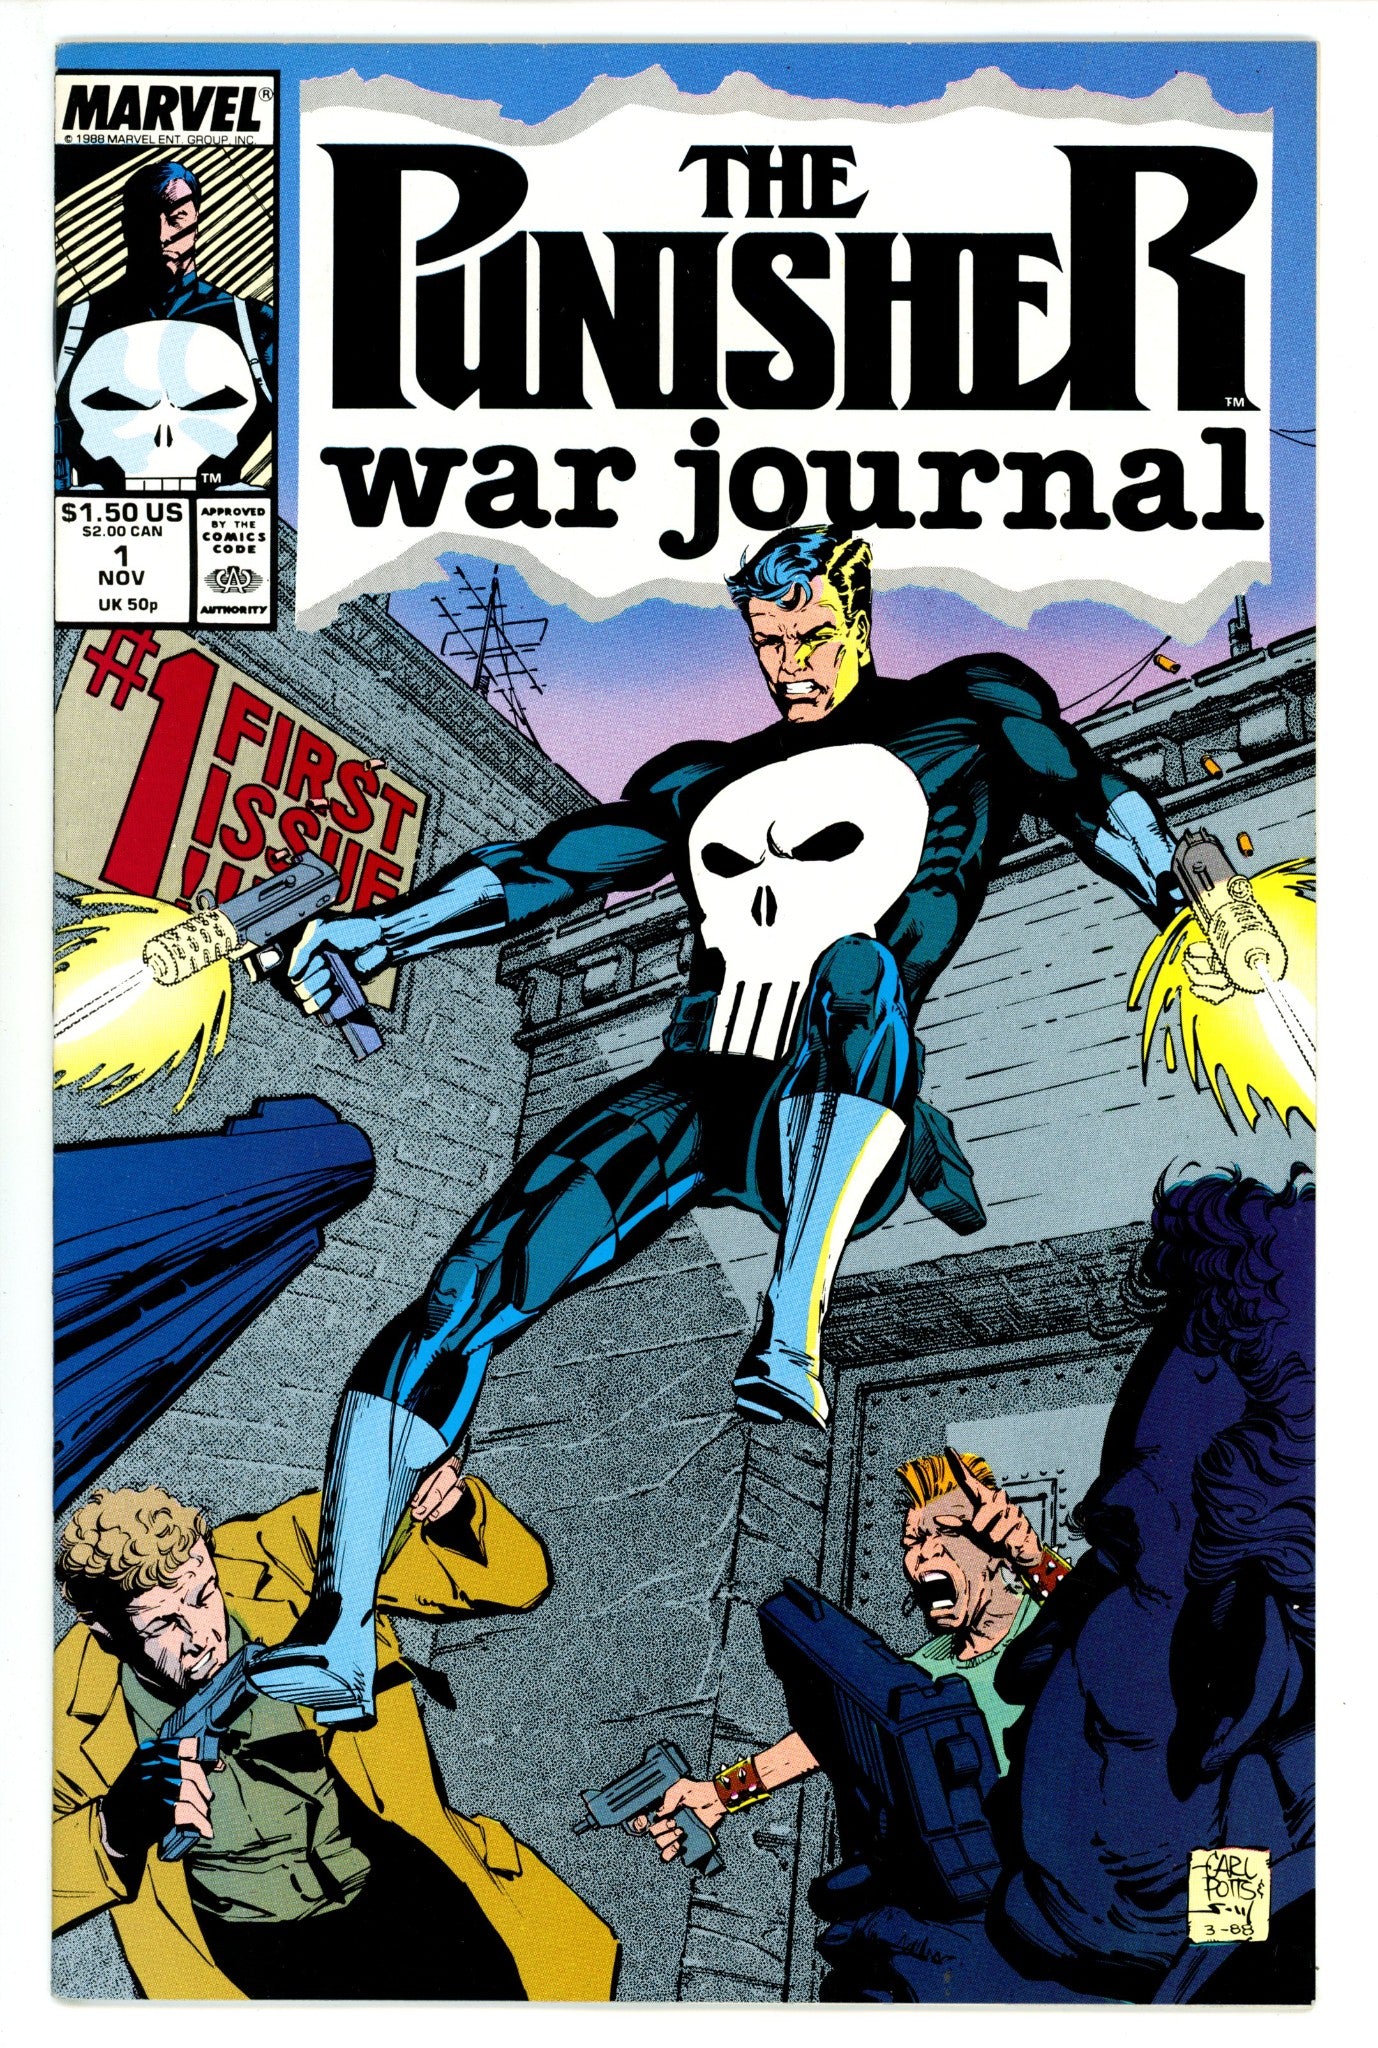 The Punisher War Journal Vol 1 1 FN/VF (7.0) (1988) 